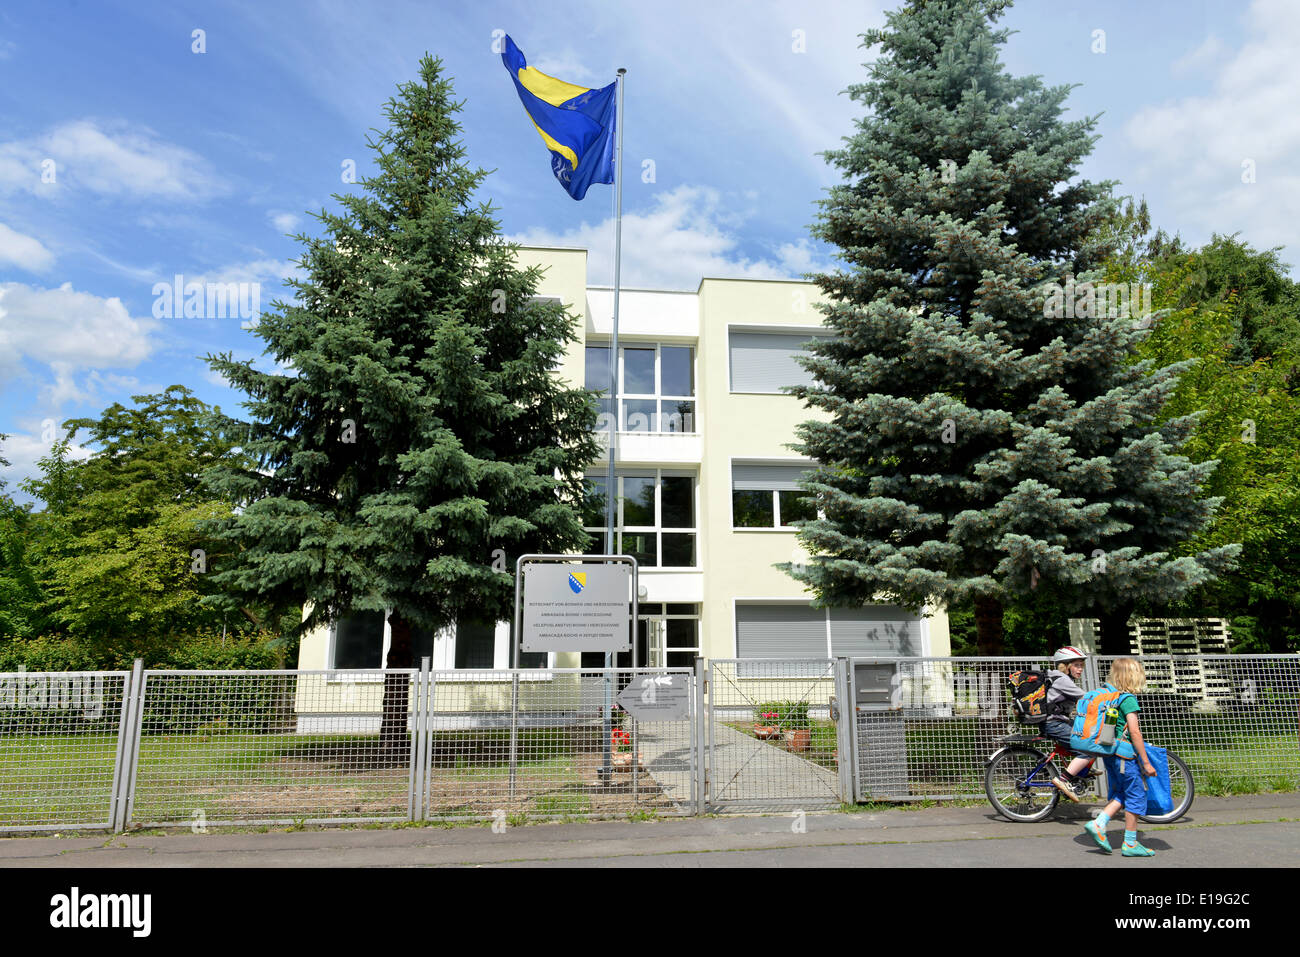 Botschaft Bosnien und Herzegowina, Ibsenstrasse, Pankow, Berlin, Deutschland Stock Photo